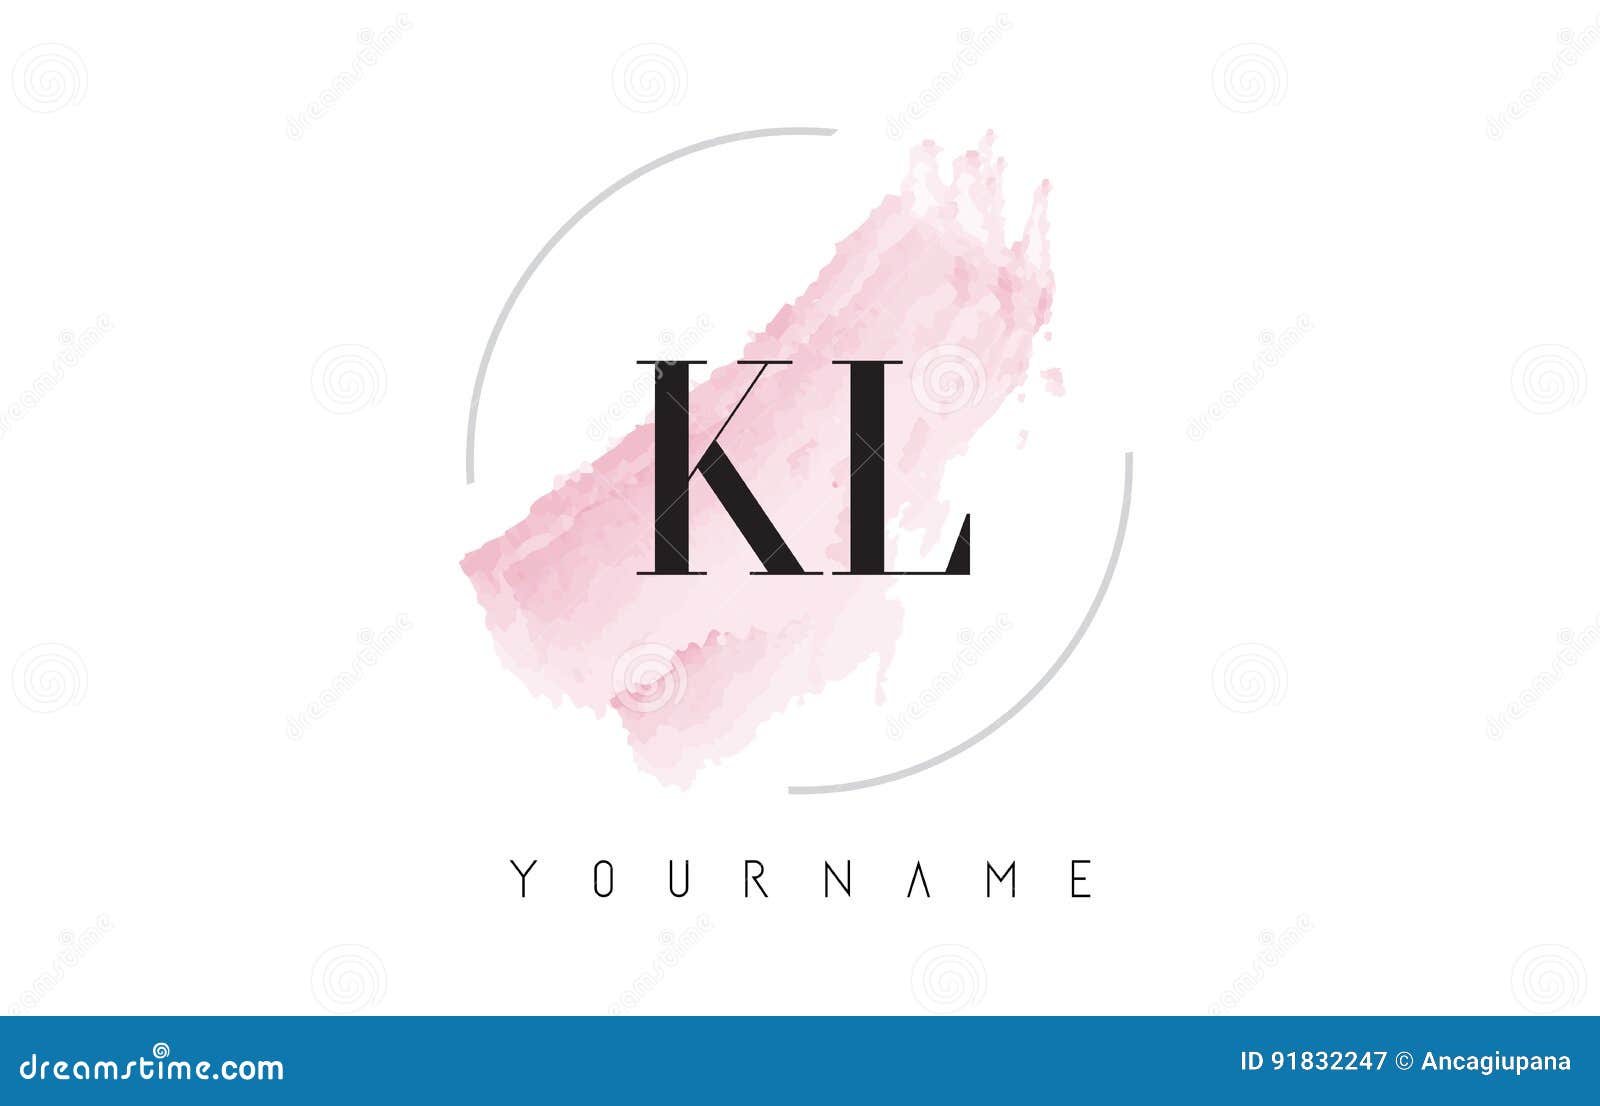 Kl K L Watercolor Letter Logo Design With Circular Brush Pattern Stock Vector Illustration Of Company Logo